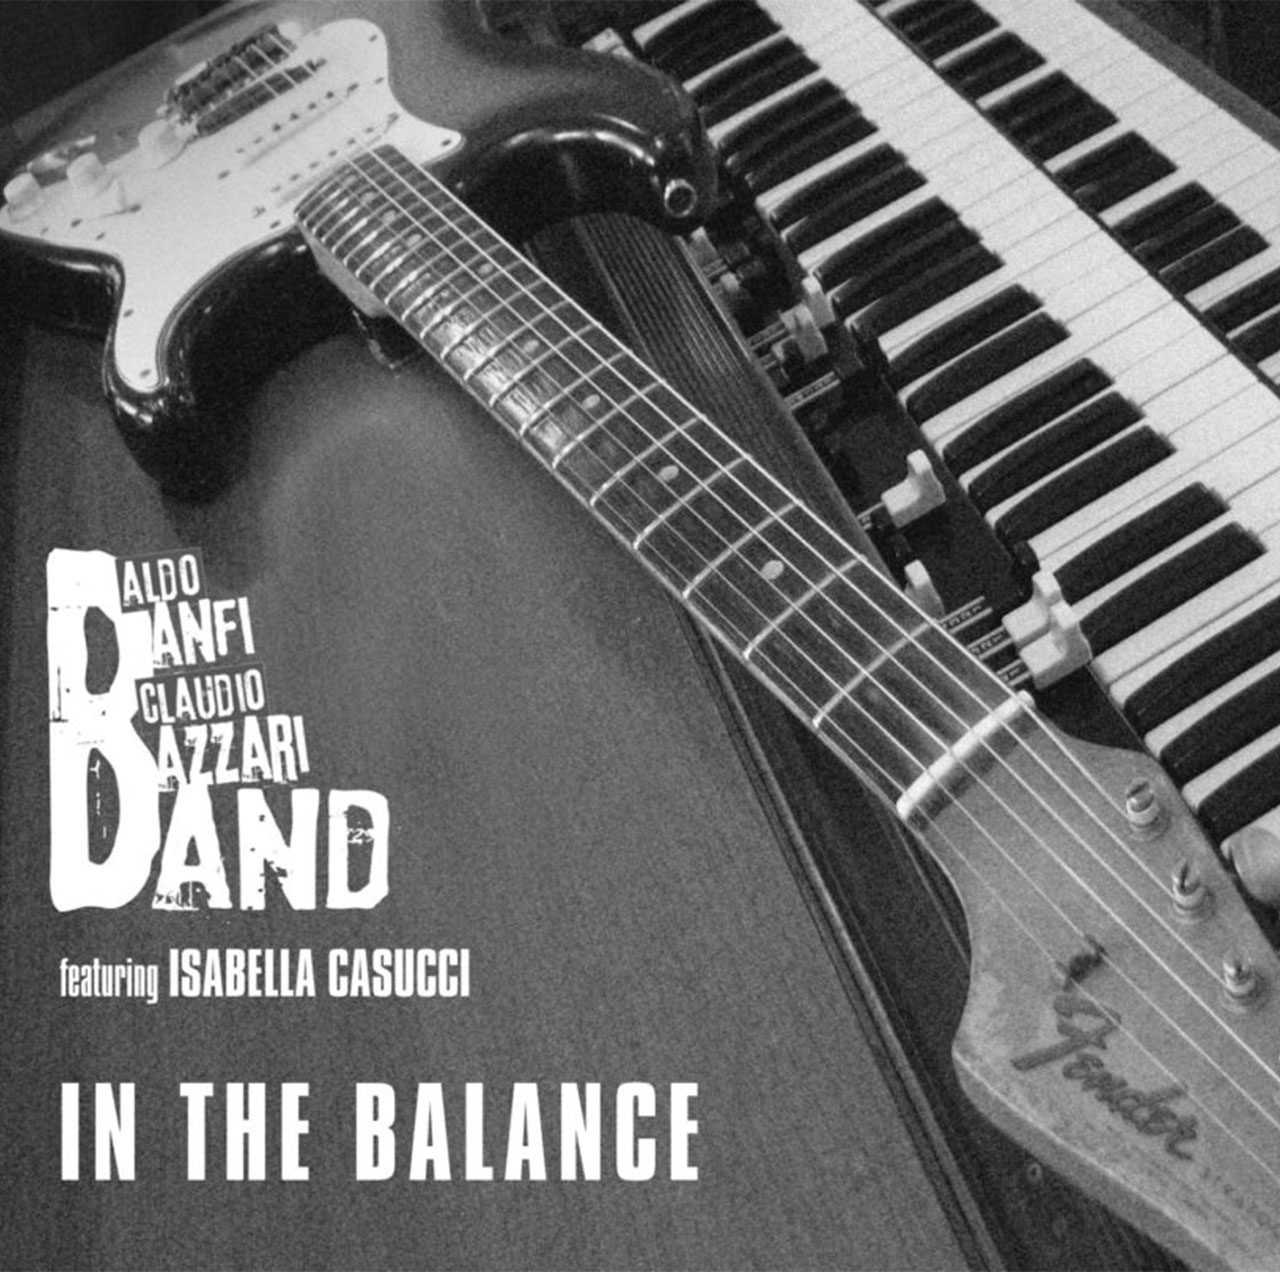 ALDO-BANFI-&-CLAUDIO-BAZZARI-BAND---“In-The-Balance” cover album